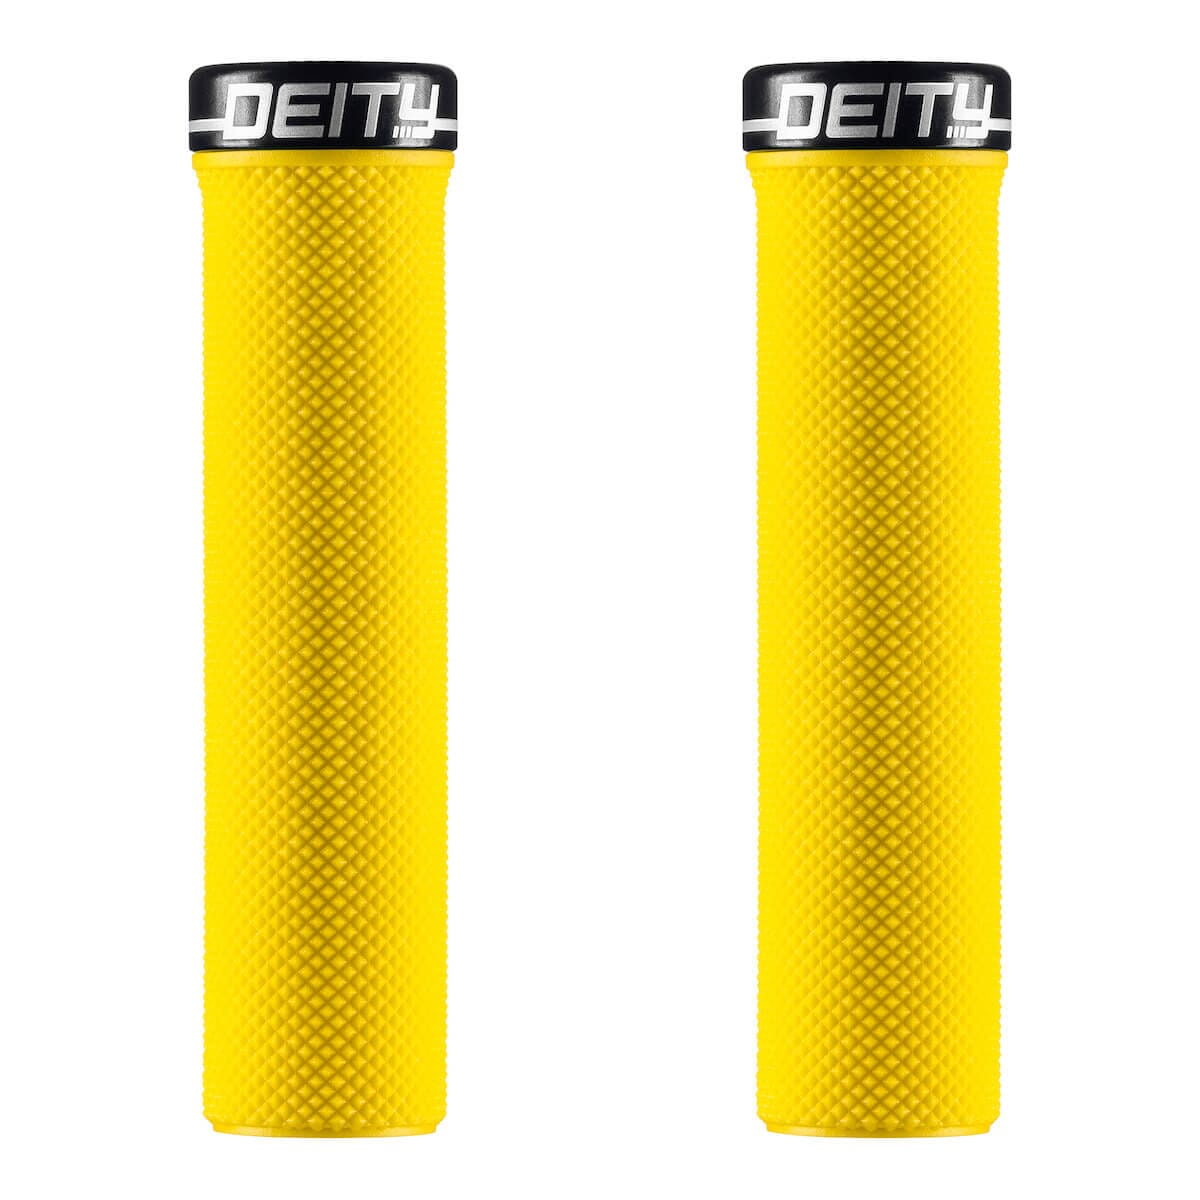 Deity Slimfit Grip Components Deity Components Yellow 